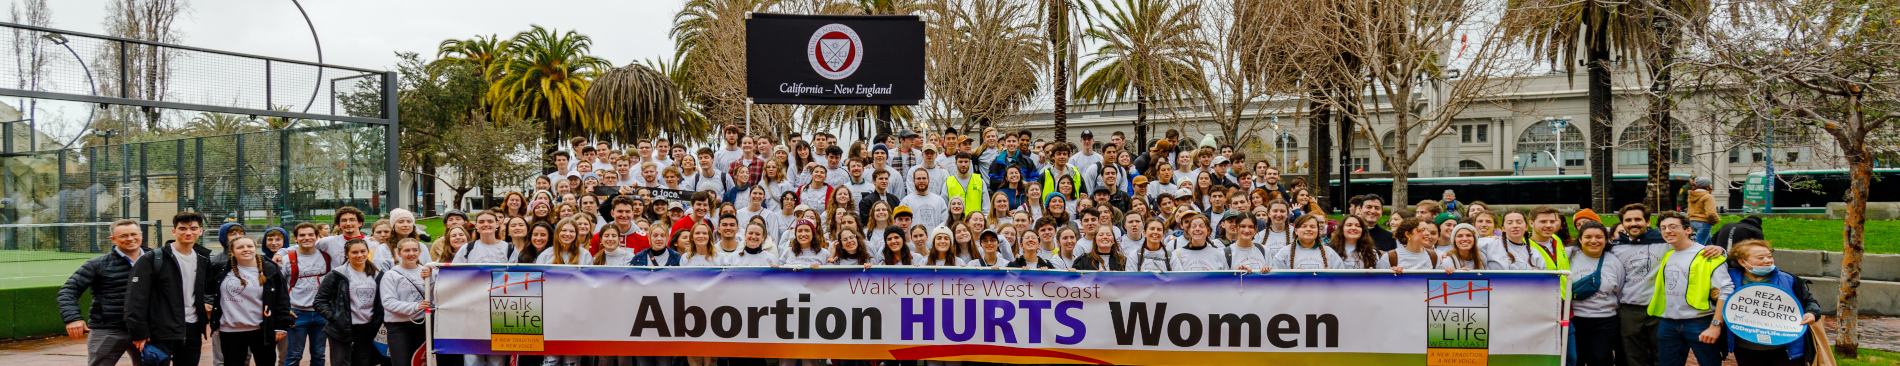 California students walk for life